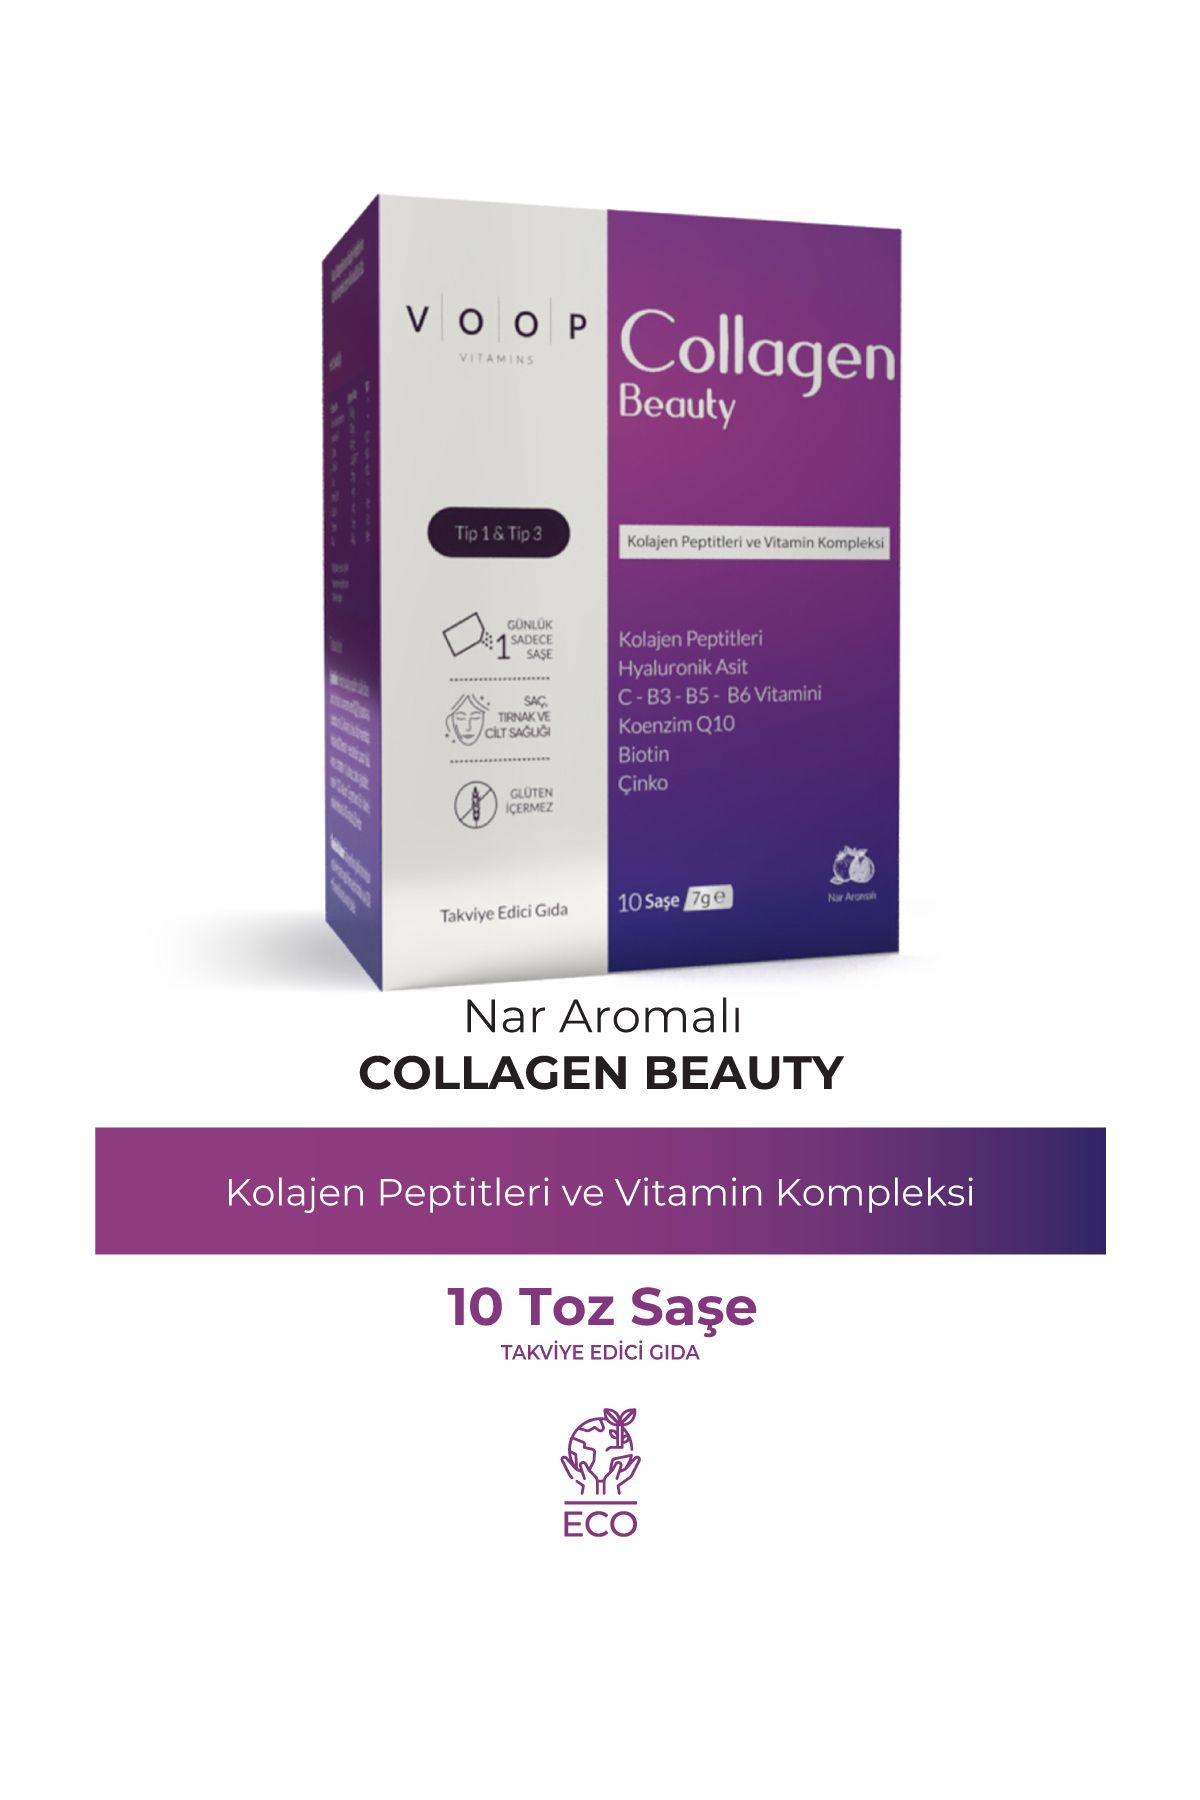 VOOP Collagen Beauty Nar Aromalı Saşe Tip 1 Ve Tip 3 - 5500 Mg | 10 Saşe - 7 gr